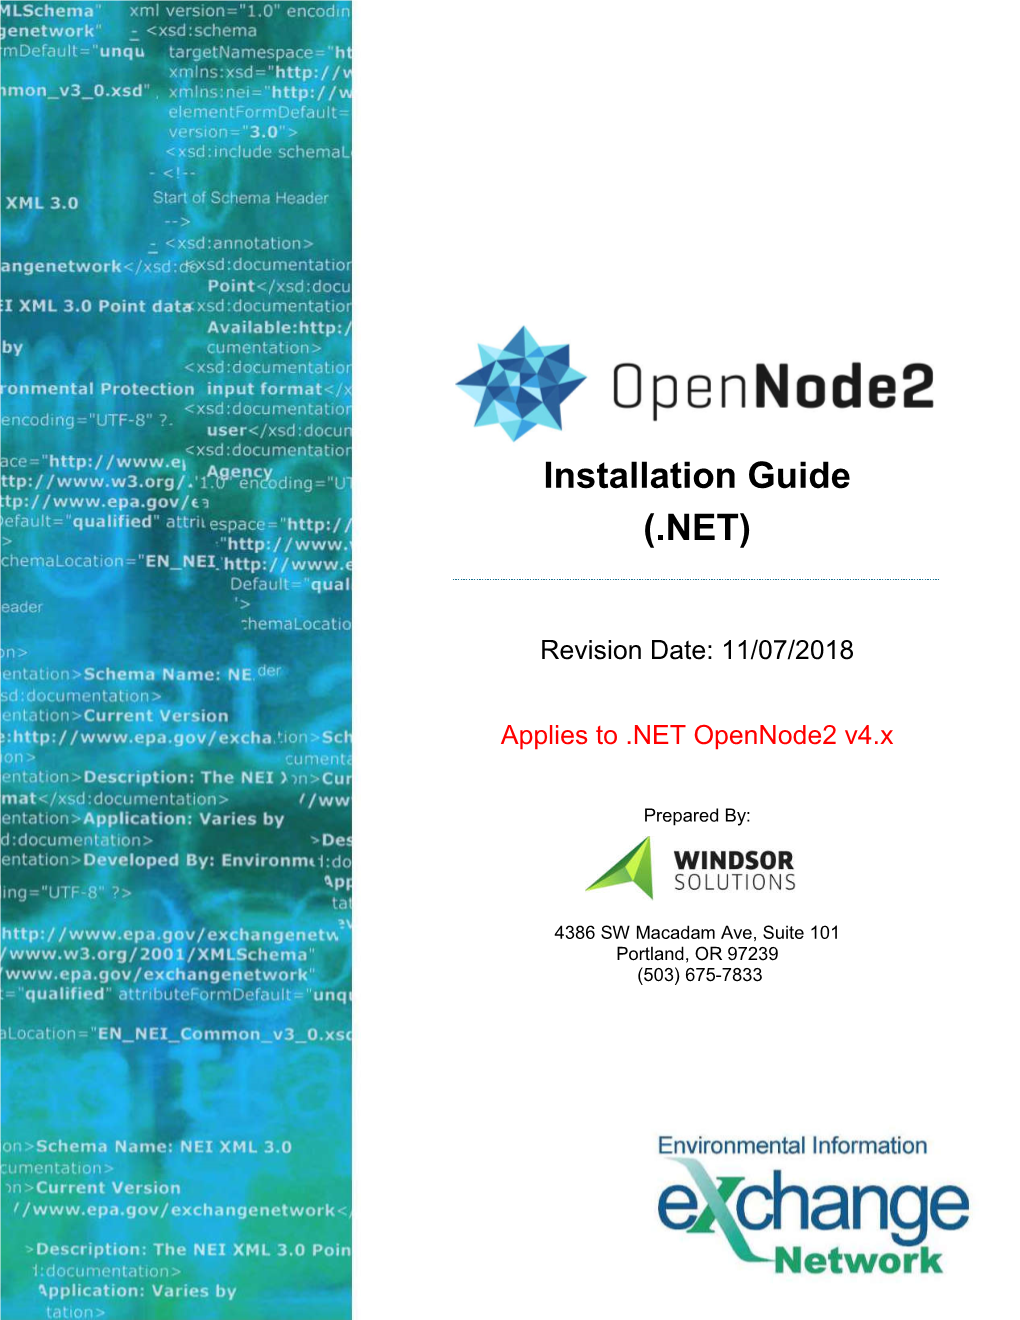 Installation Guide (.NET)